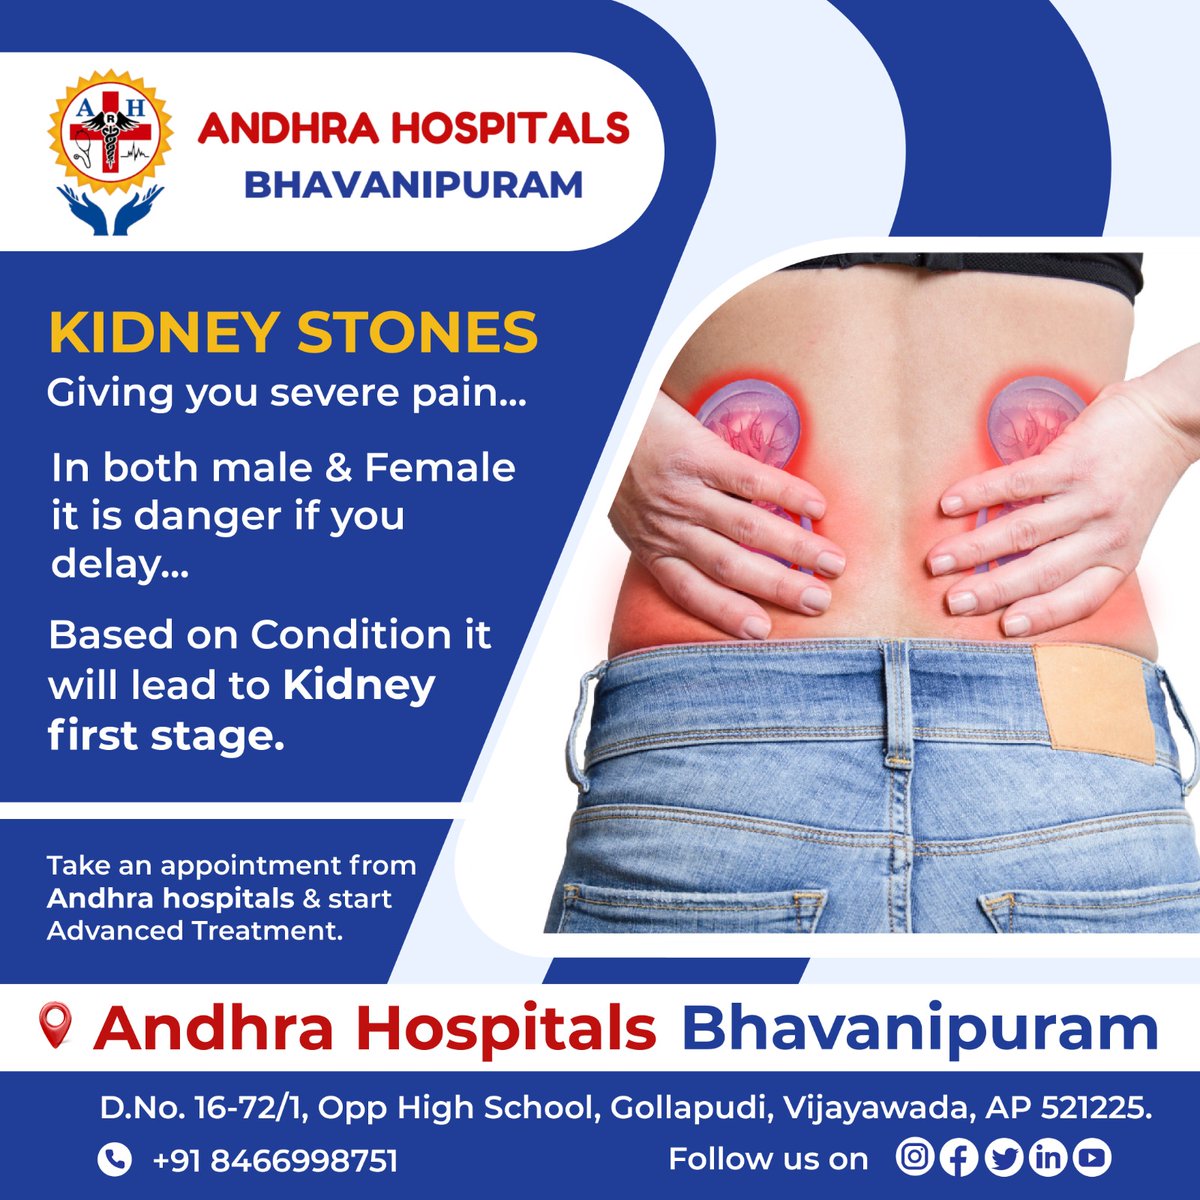 For More Info Visit Us: andhrahospitals.org/ah
Call Us on:+91-8466998751
.
.
.
#andhrahospitalsbhavanipuram #AndhraHospitals #bhavanipuram #kidneyproblem #kidneypain #kindneyfunction #kidneydisease #kidneytransplant #kidneyfailure #dialysis #urology #urologist #nephron